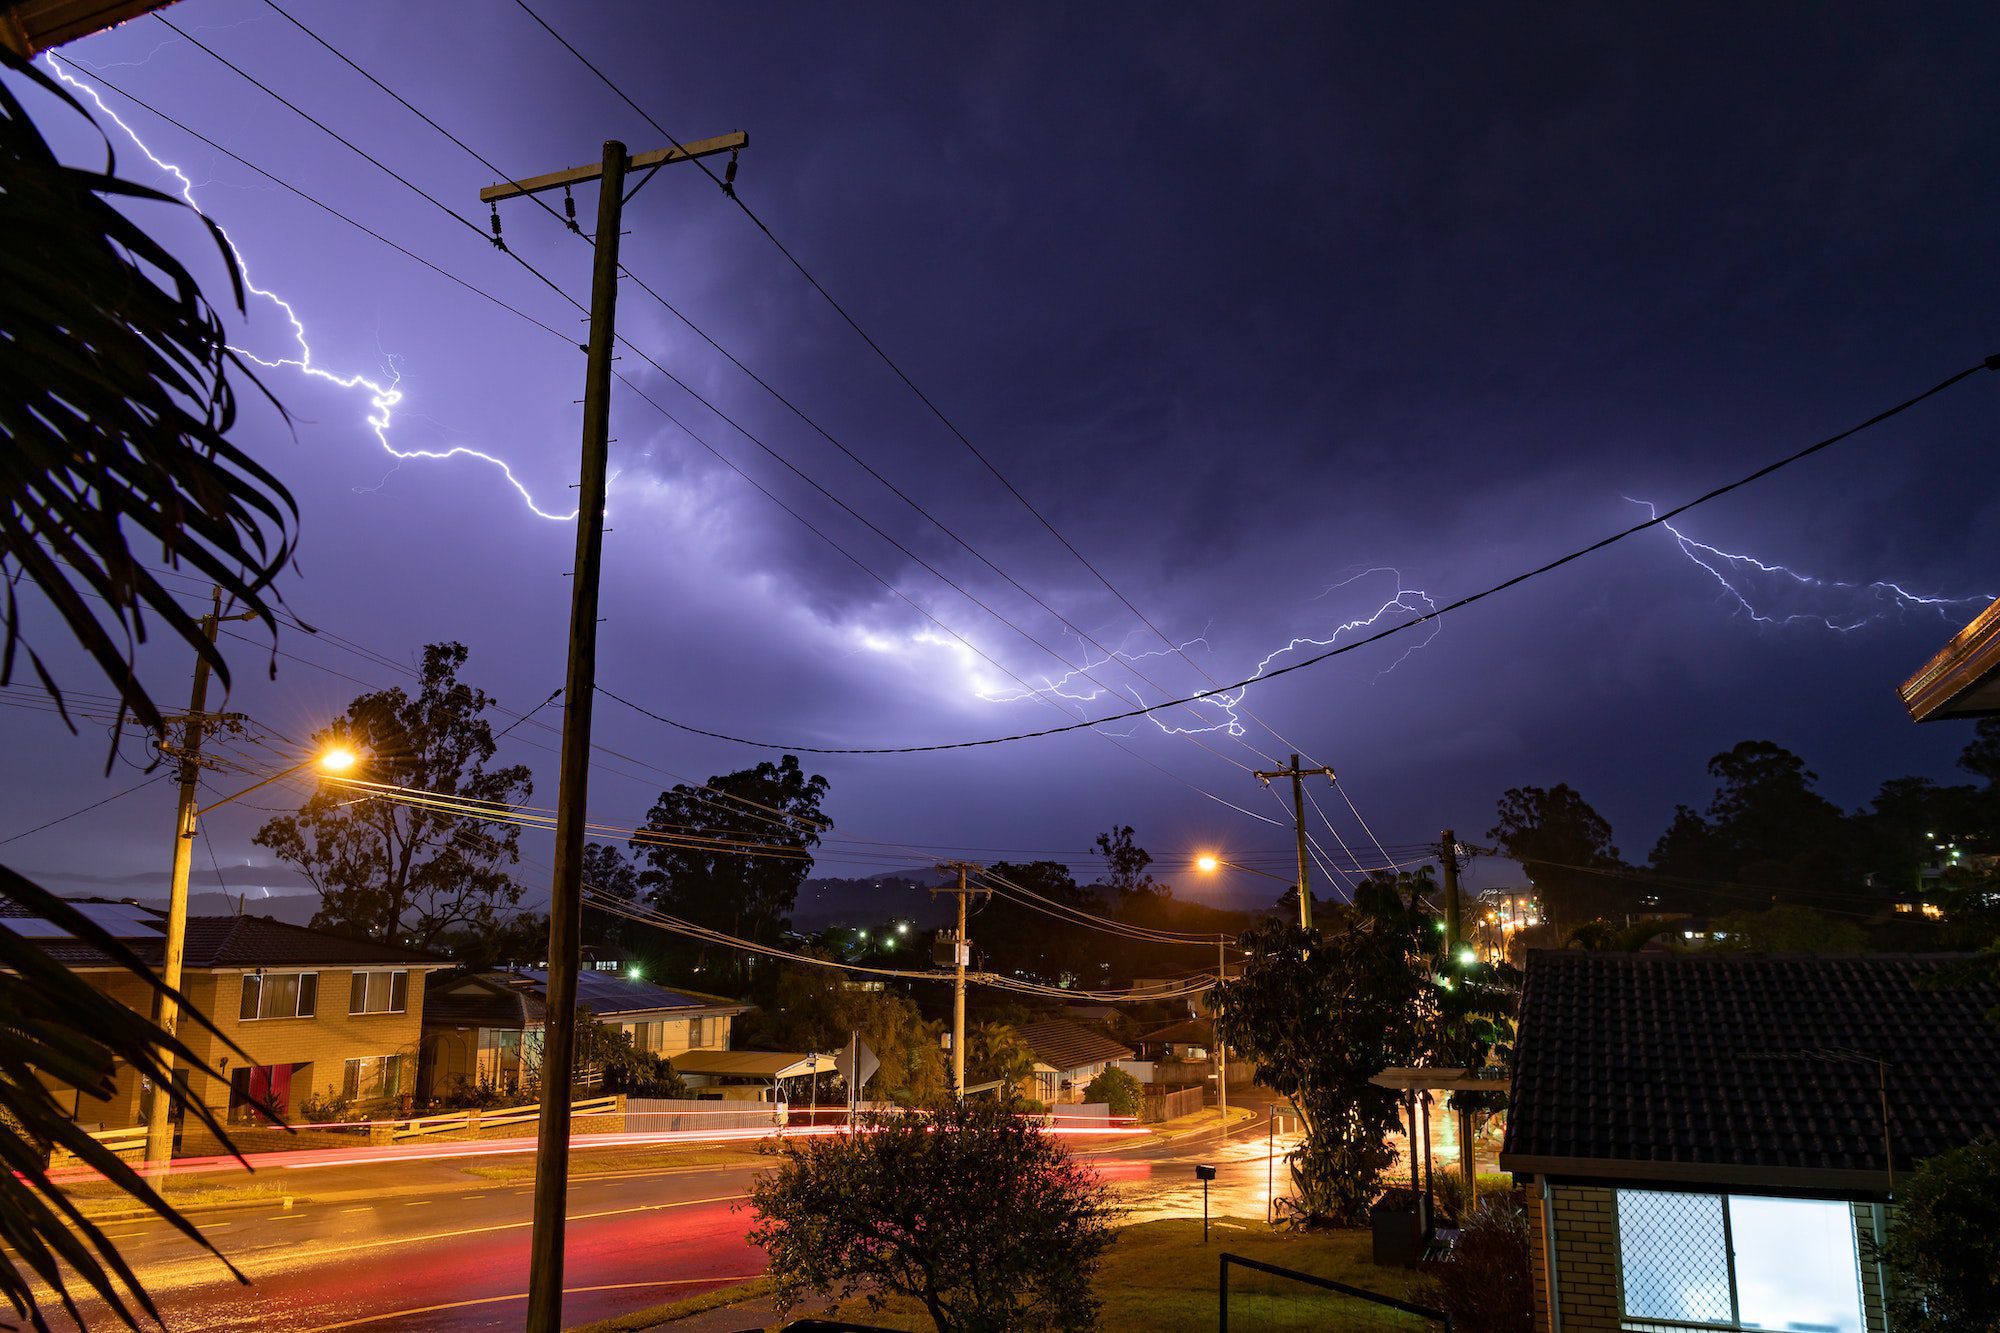 Lightning flashing across the sky in suburban Brisbane Australia